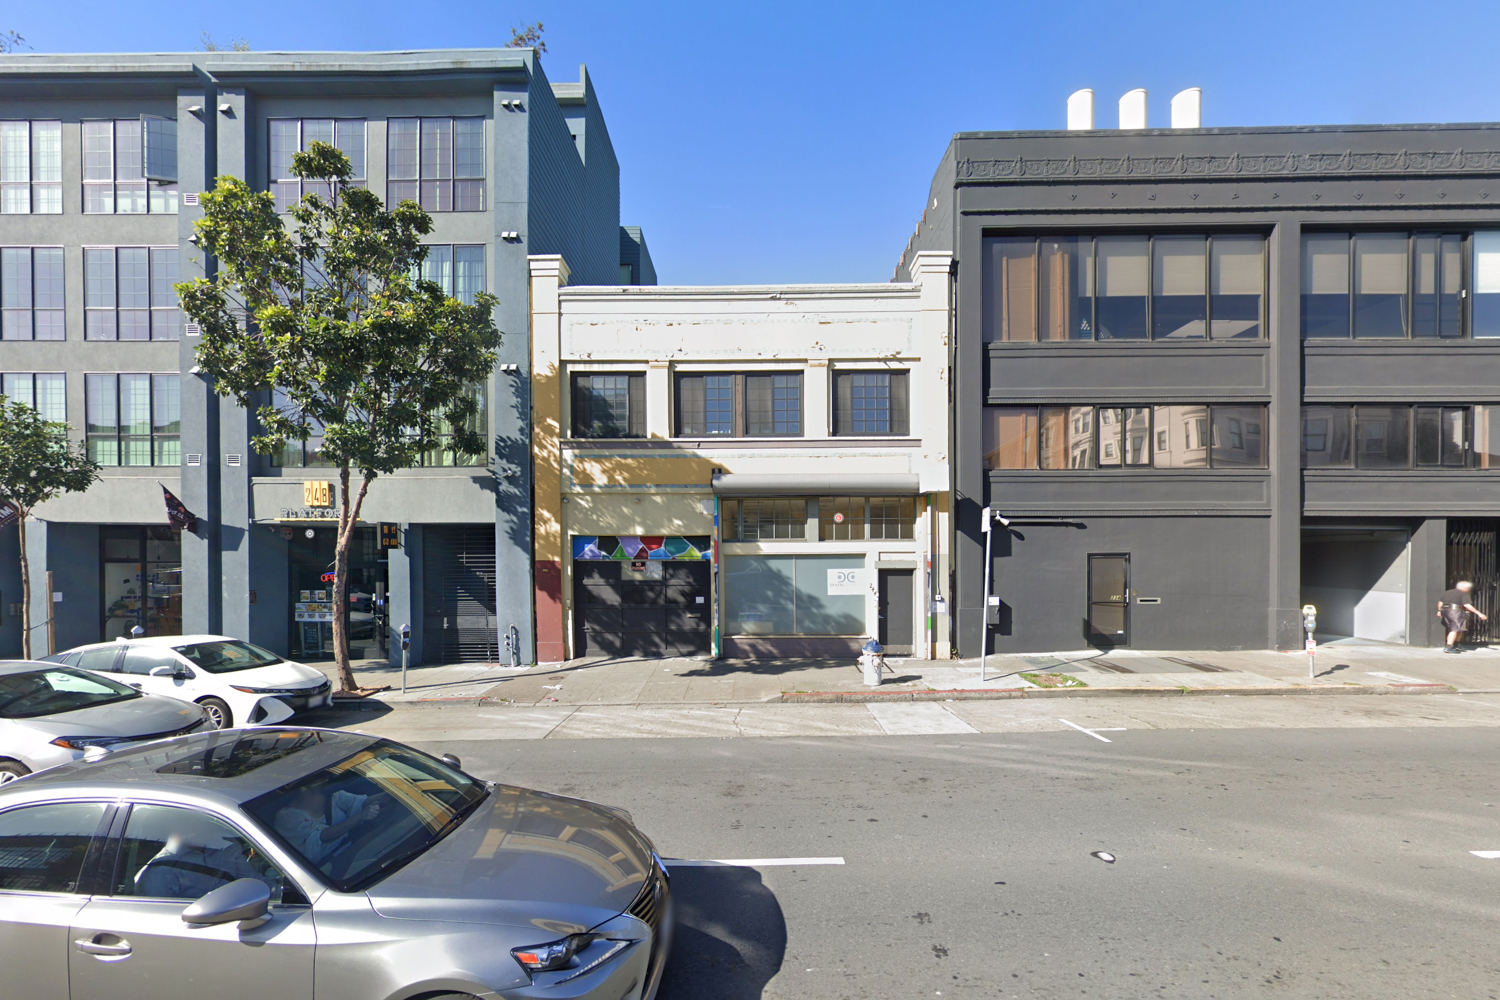 244 9th Street, image via Google Street View